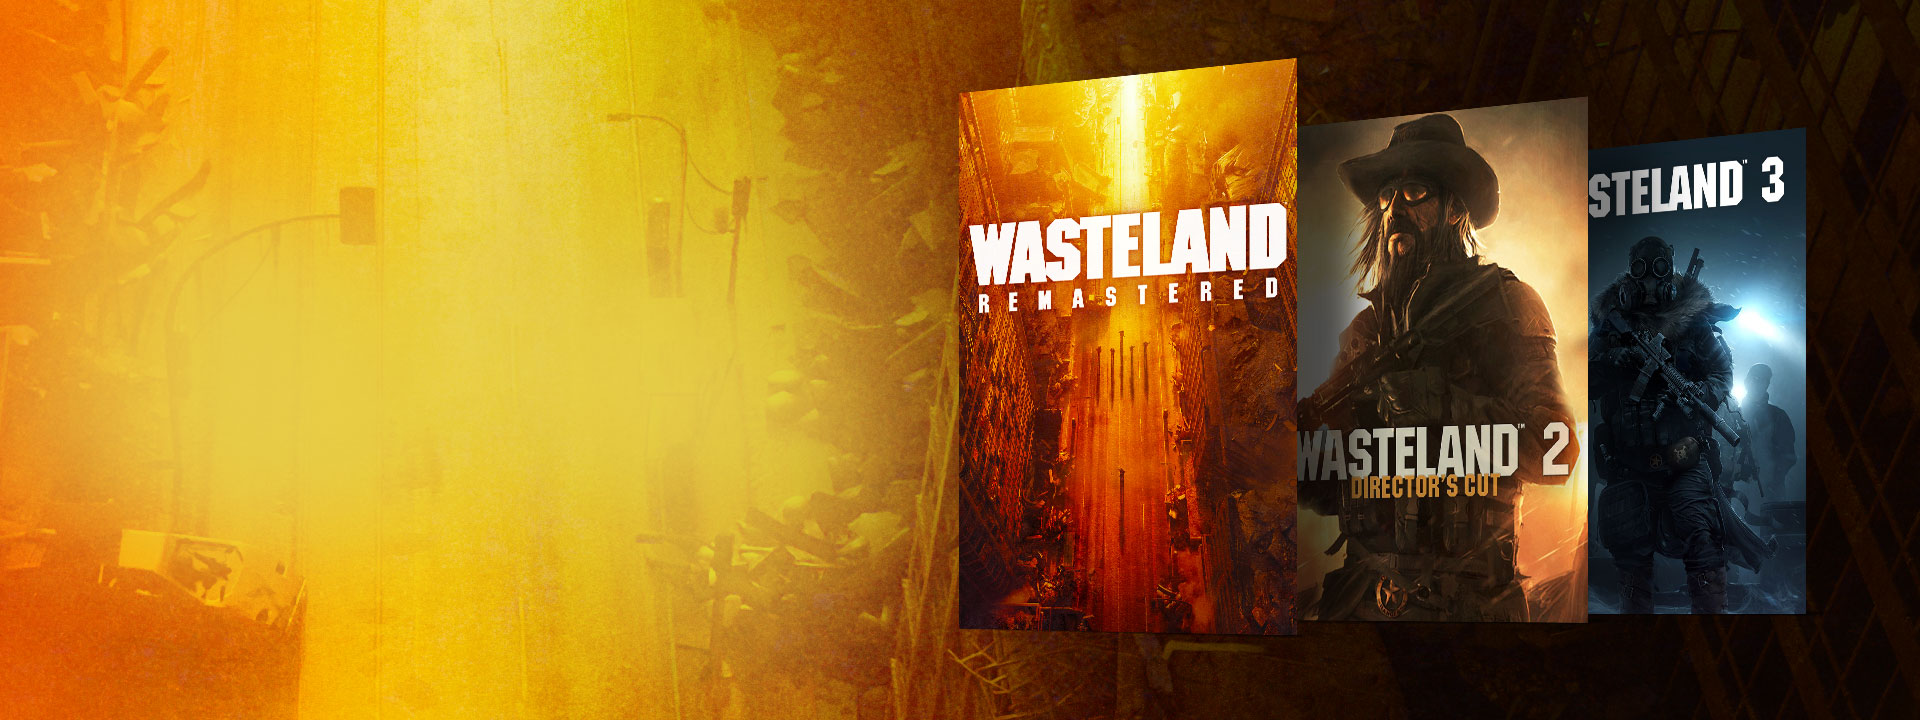 Boxshots of Wasteland Remastered, Wasteland 2 Director’s Cut και Wasteland 3. Φόντο ενός εγκαταλειμμένου δρόμου σε κίτρινες και πορτοκαλί αποχρώσεις